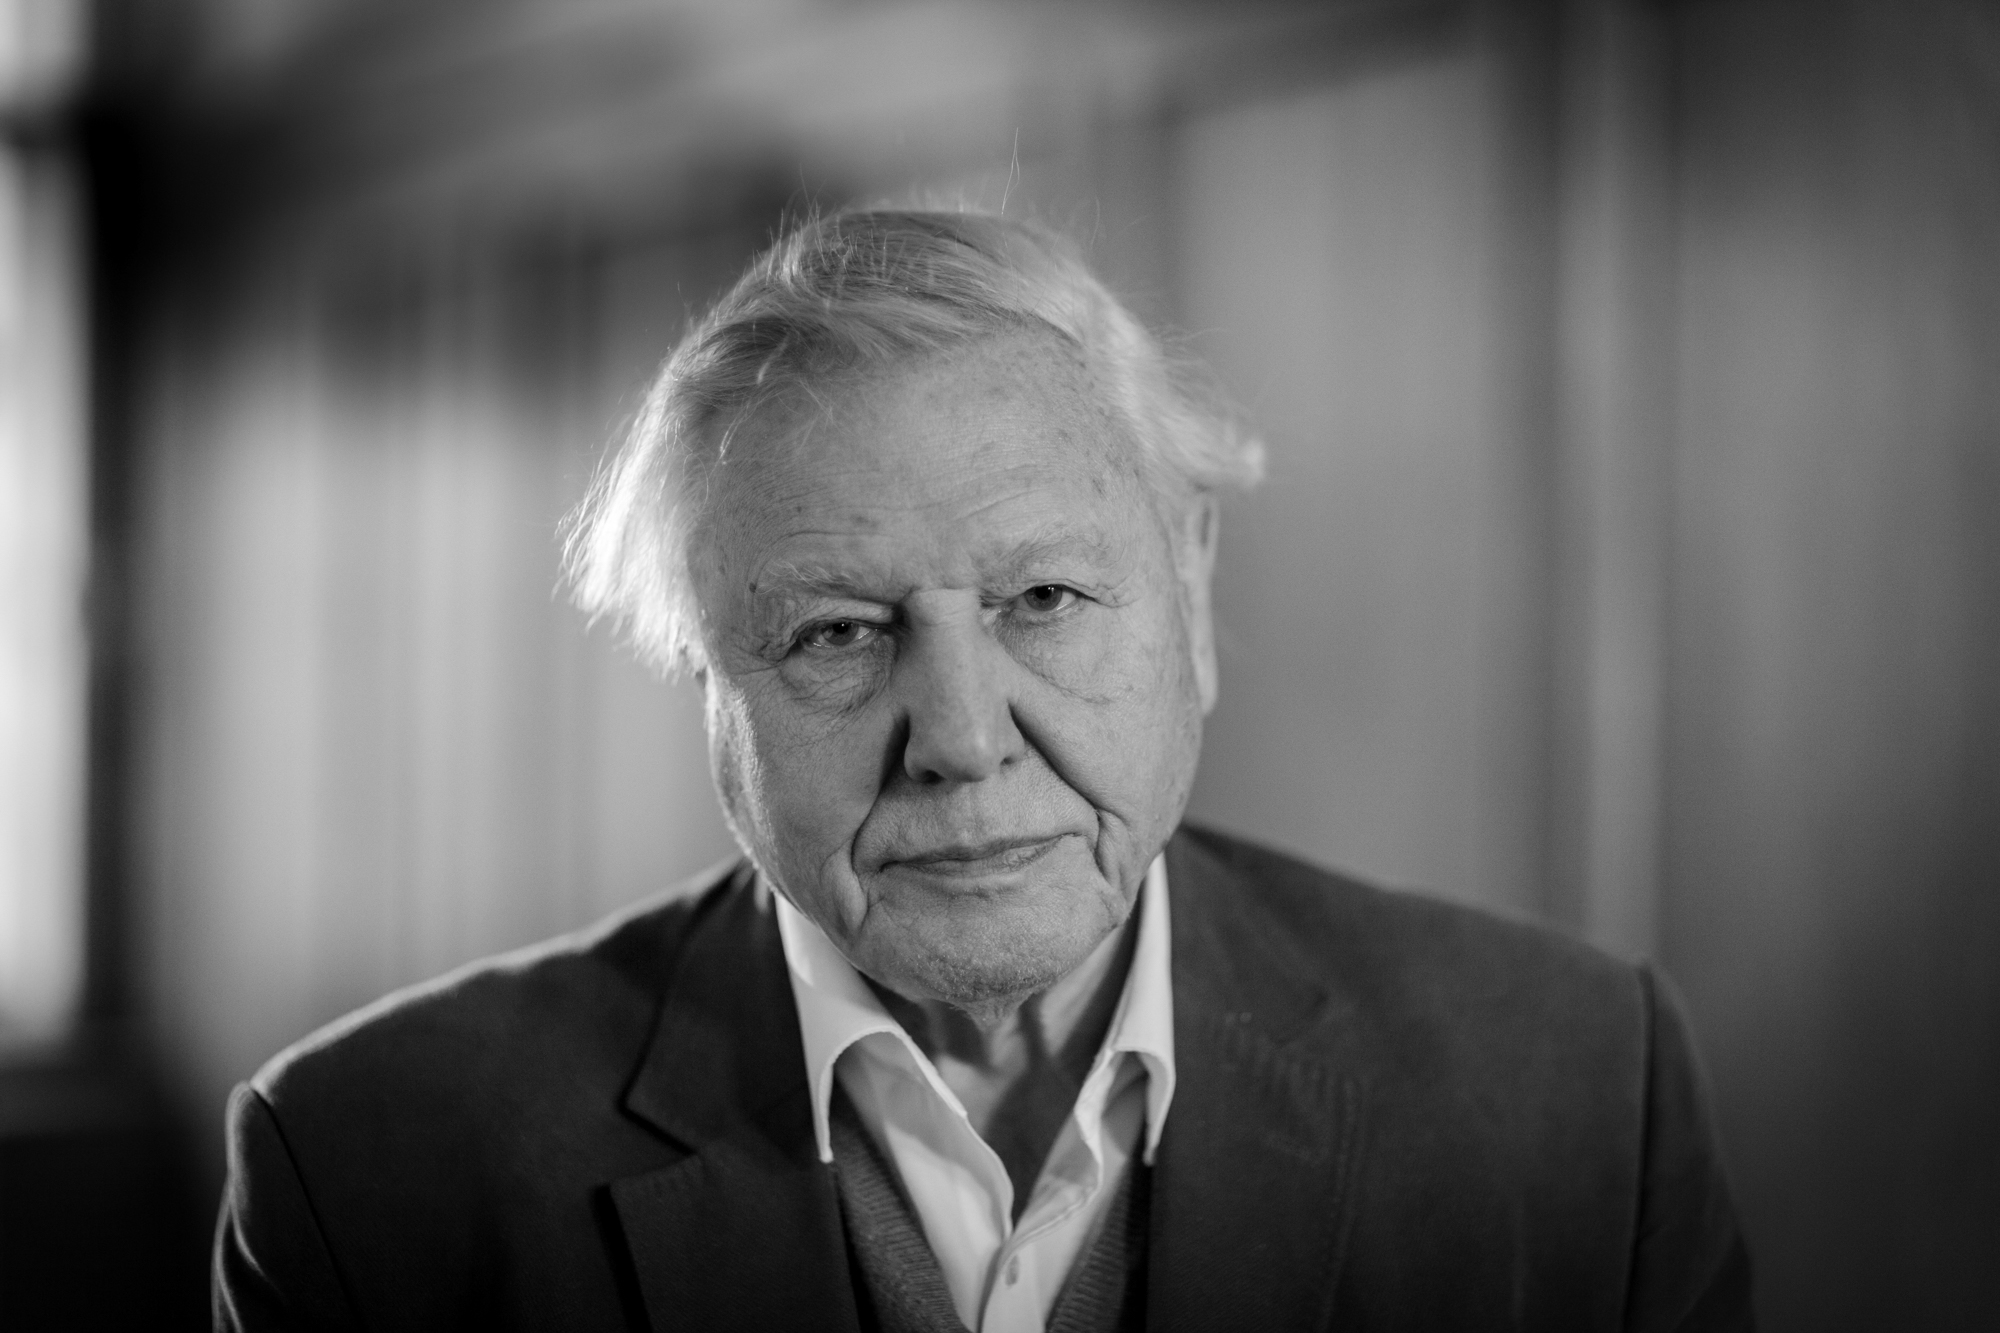  Sir David Attenborough CBE / London 2015 